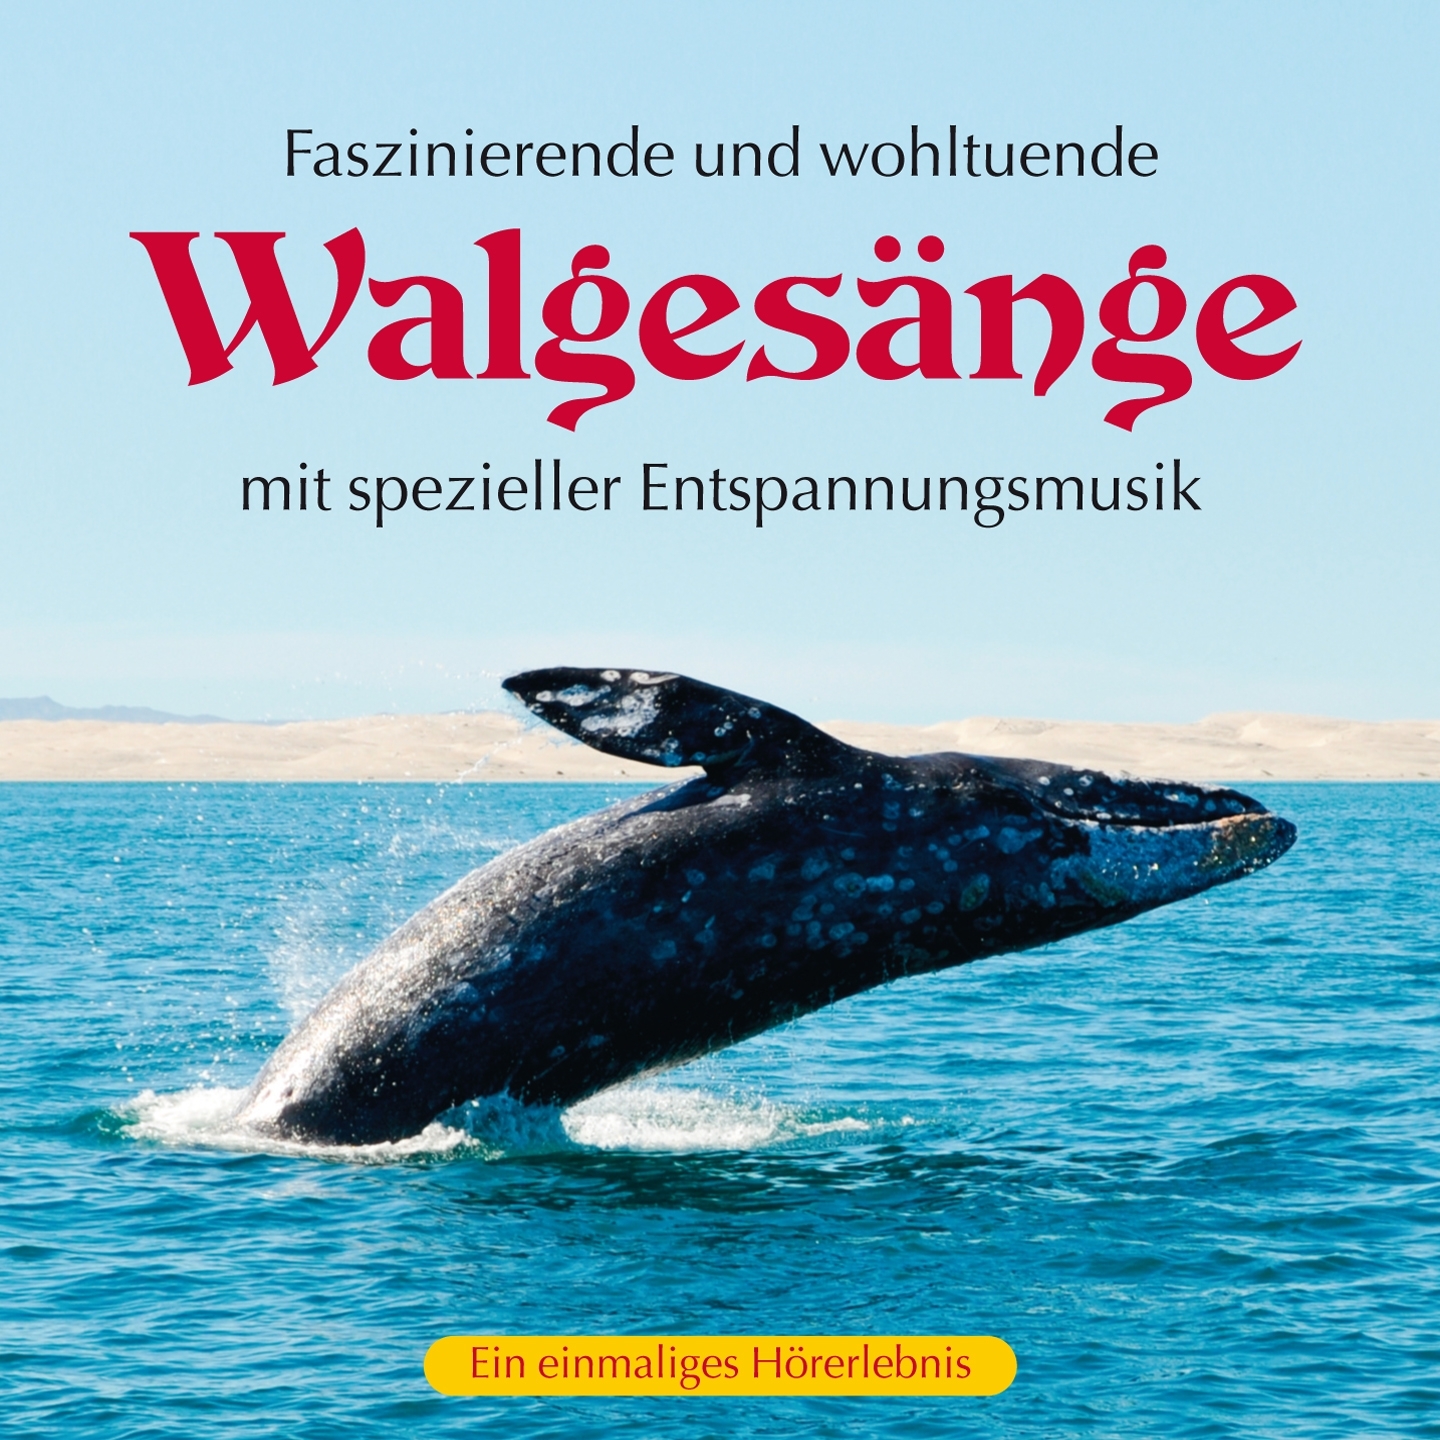 Traumhaft friedvolle Walges nge, Pt. 2 ge